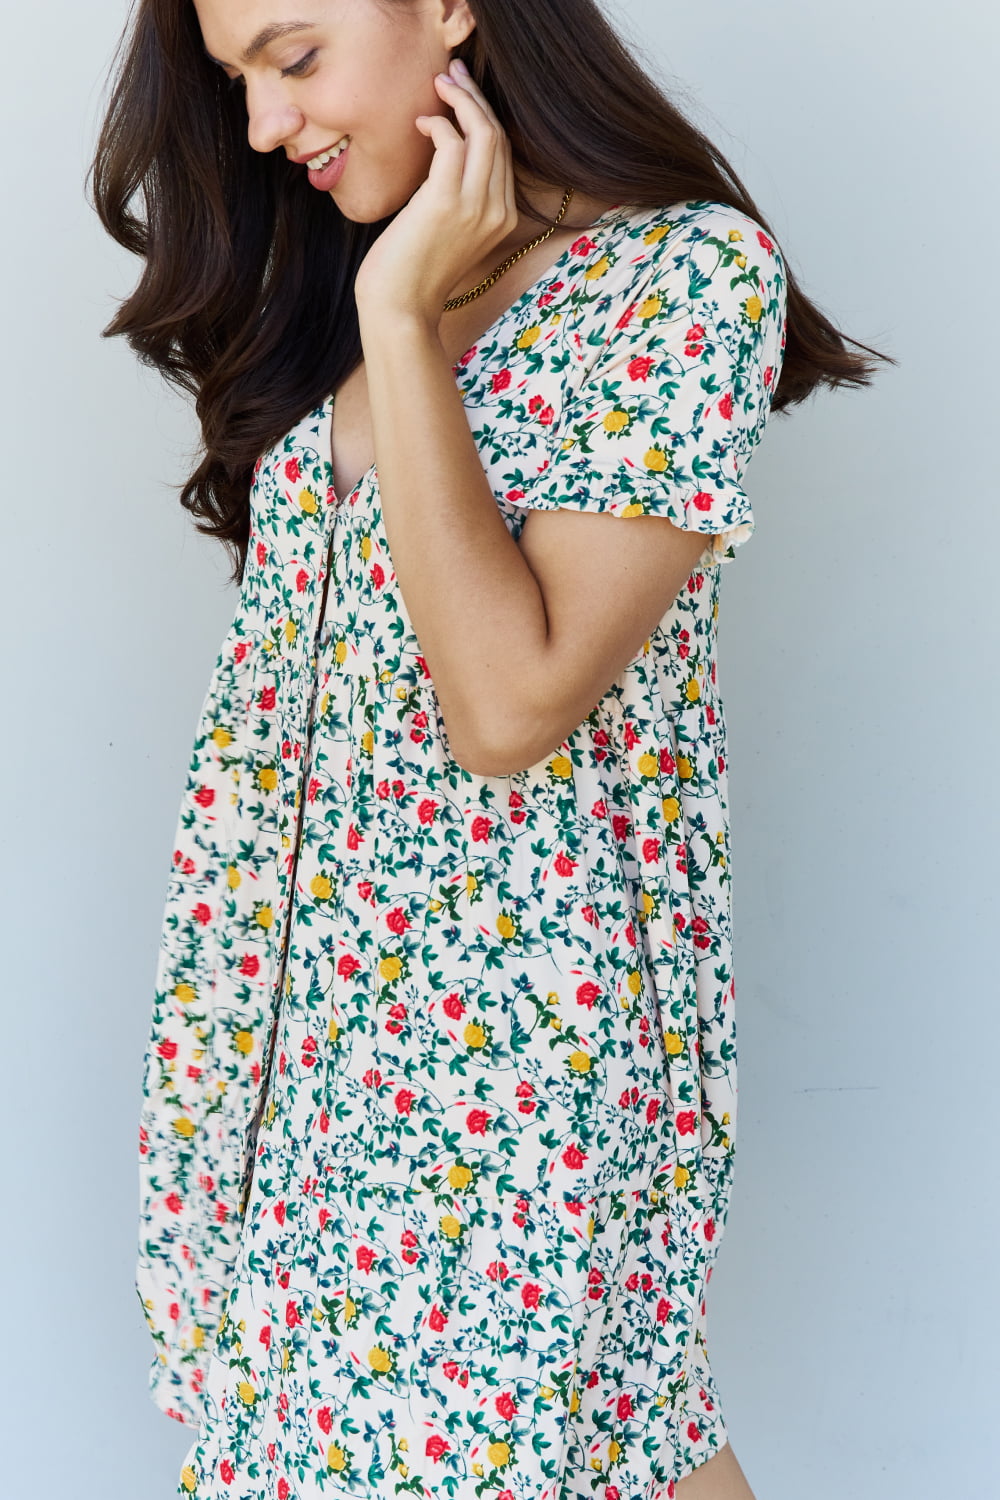 Ninexis Follow Me Full Size V-Neck Ruffle Sleeve Floral Dress - Tigbul's Fashion